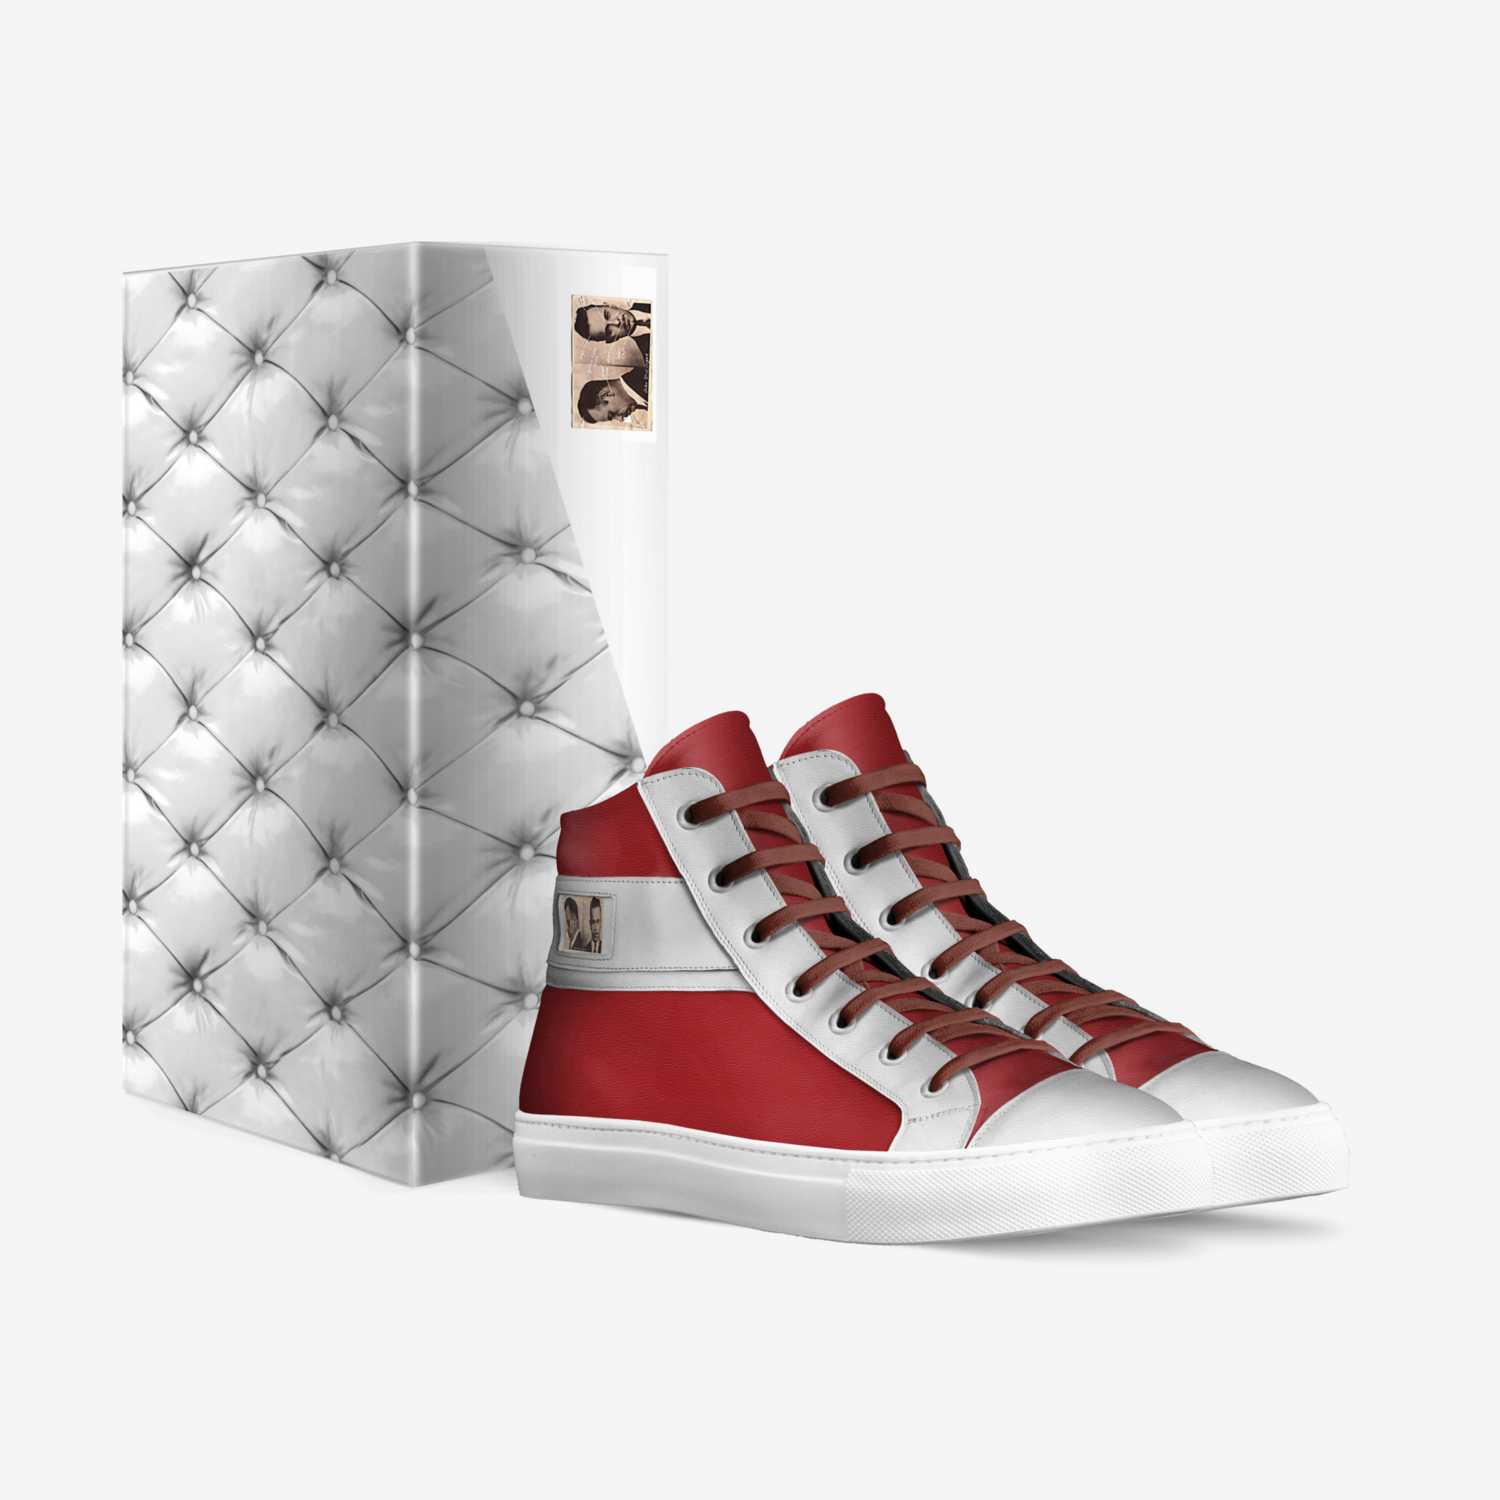 Delgado custom made in Italy shoes by Saulius Steponavičius | Box view